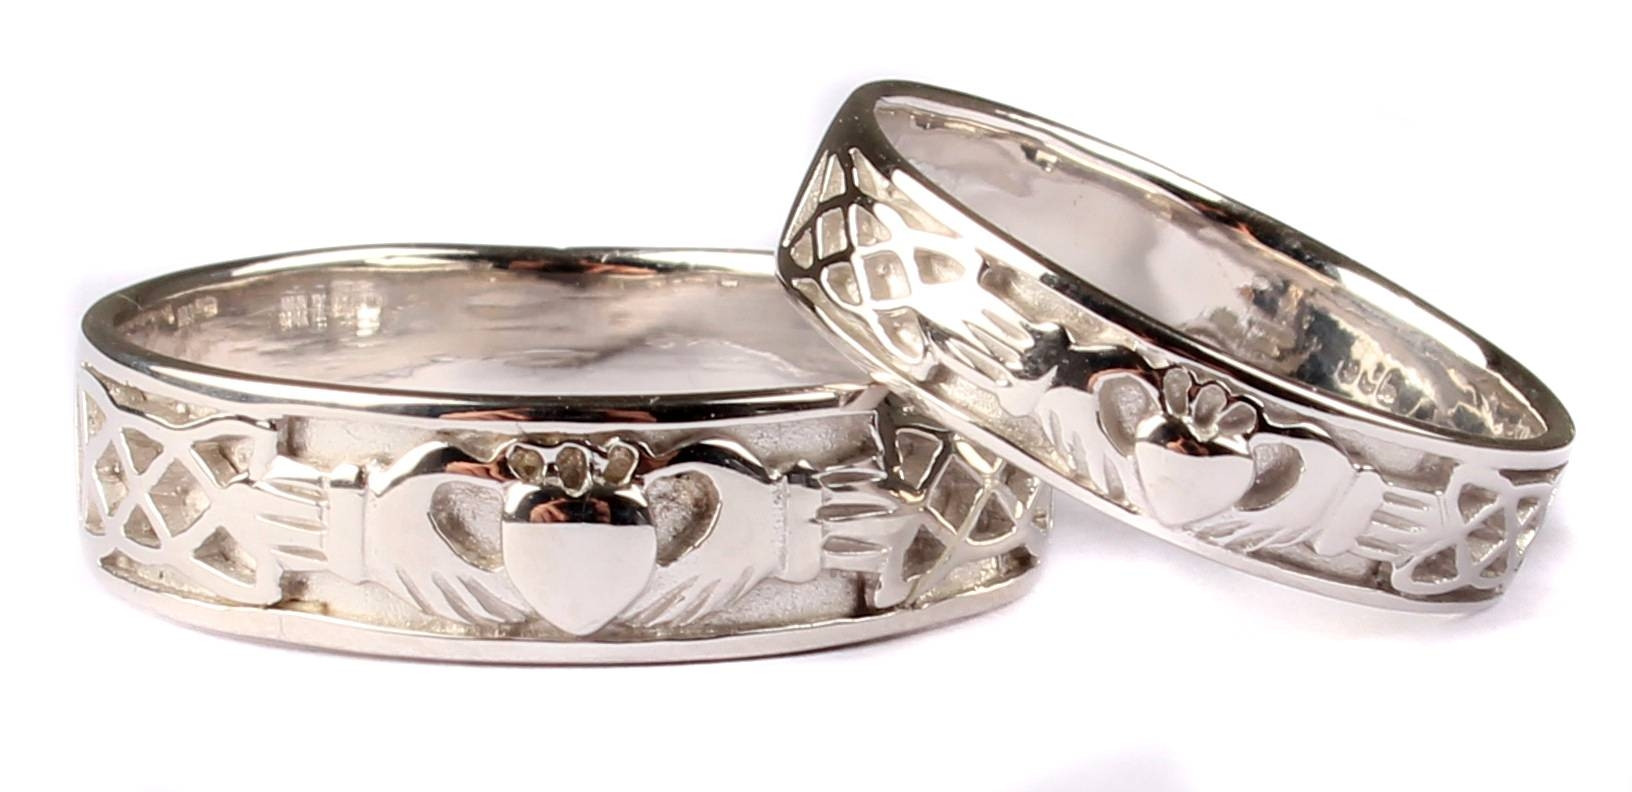 Diamond Claddagh Wedding Ring Sets
 15 Inspirations of Diamond Claddagh Engagement & Wedding